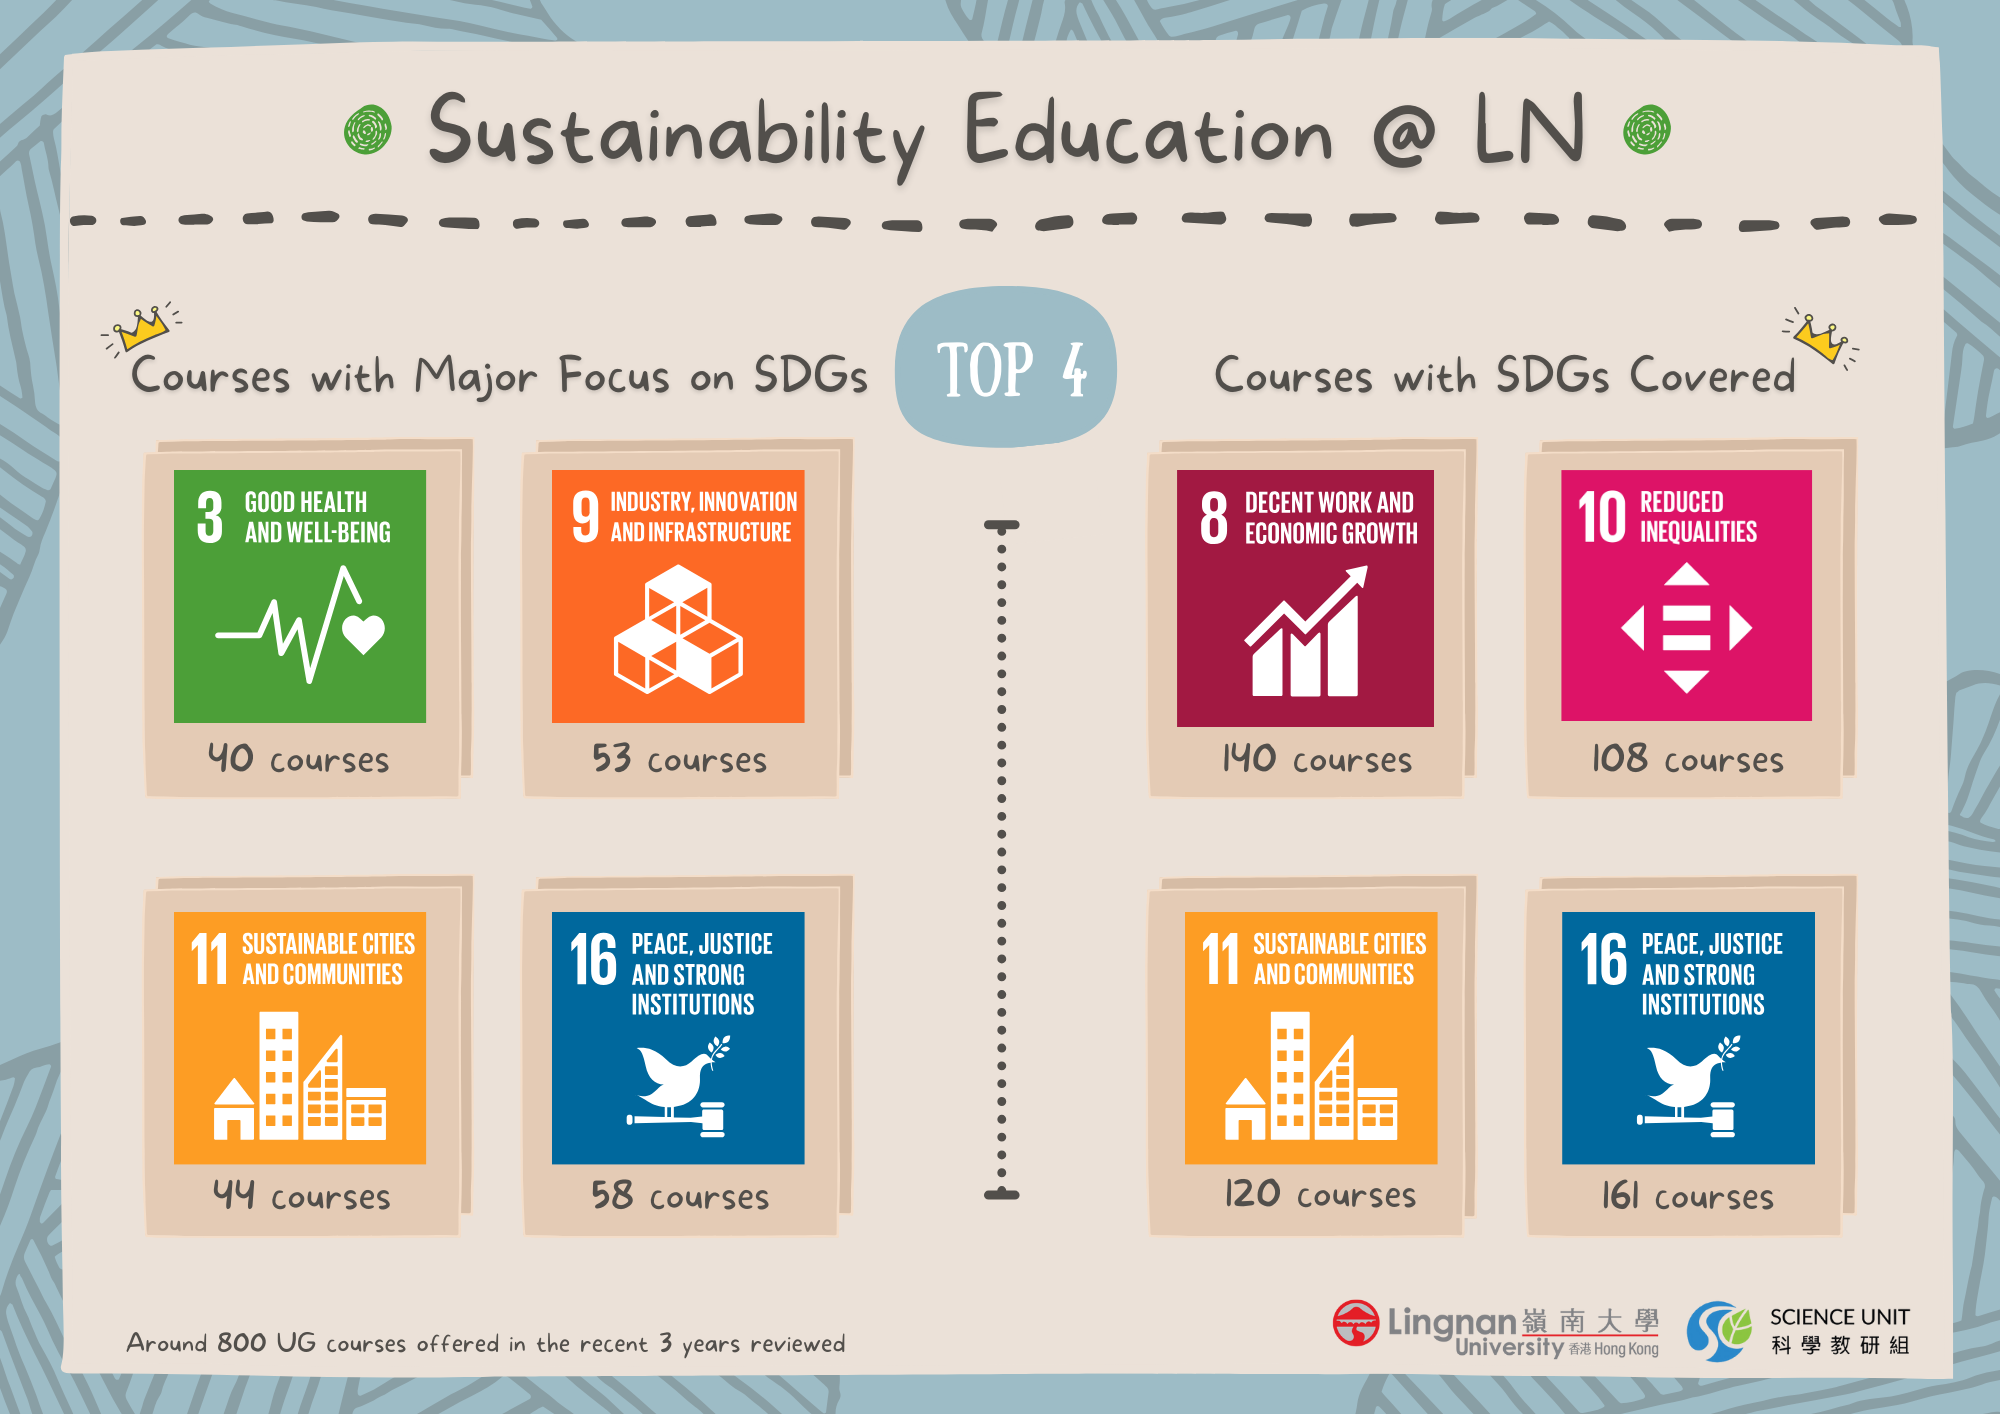 SDG Summary